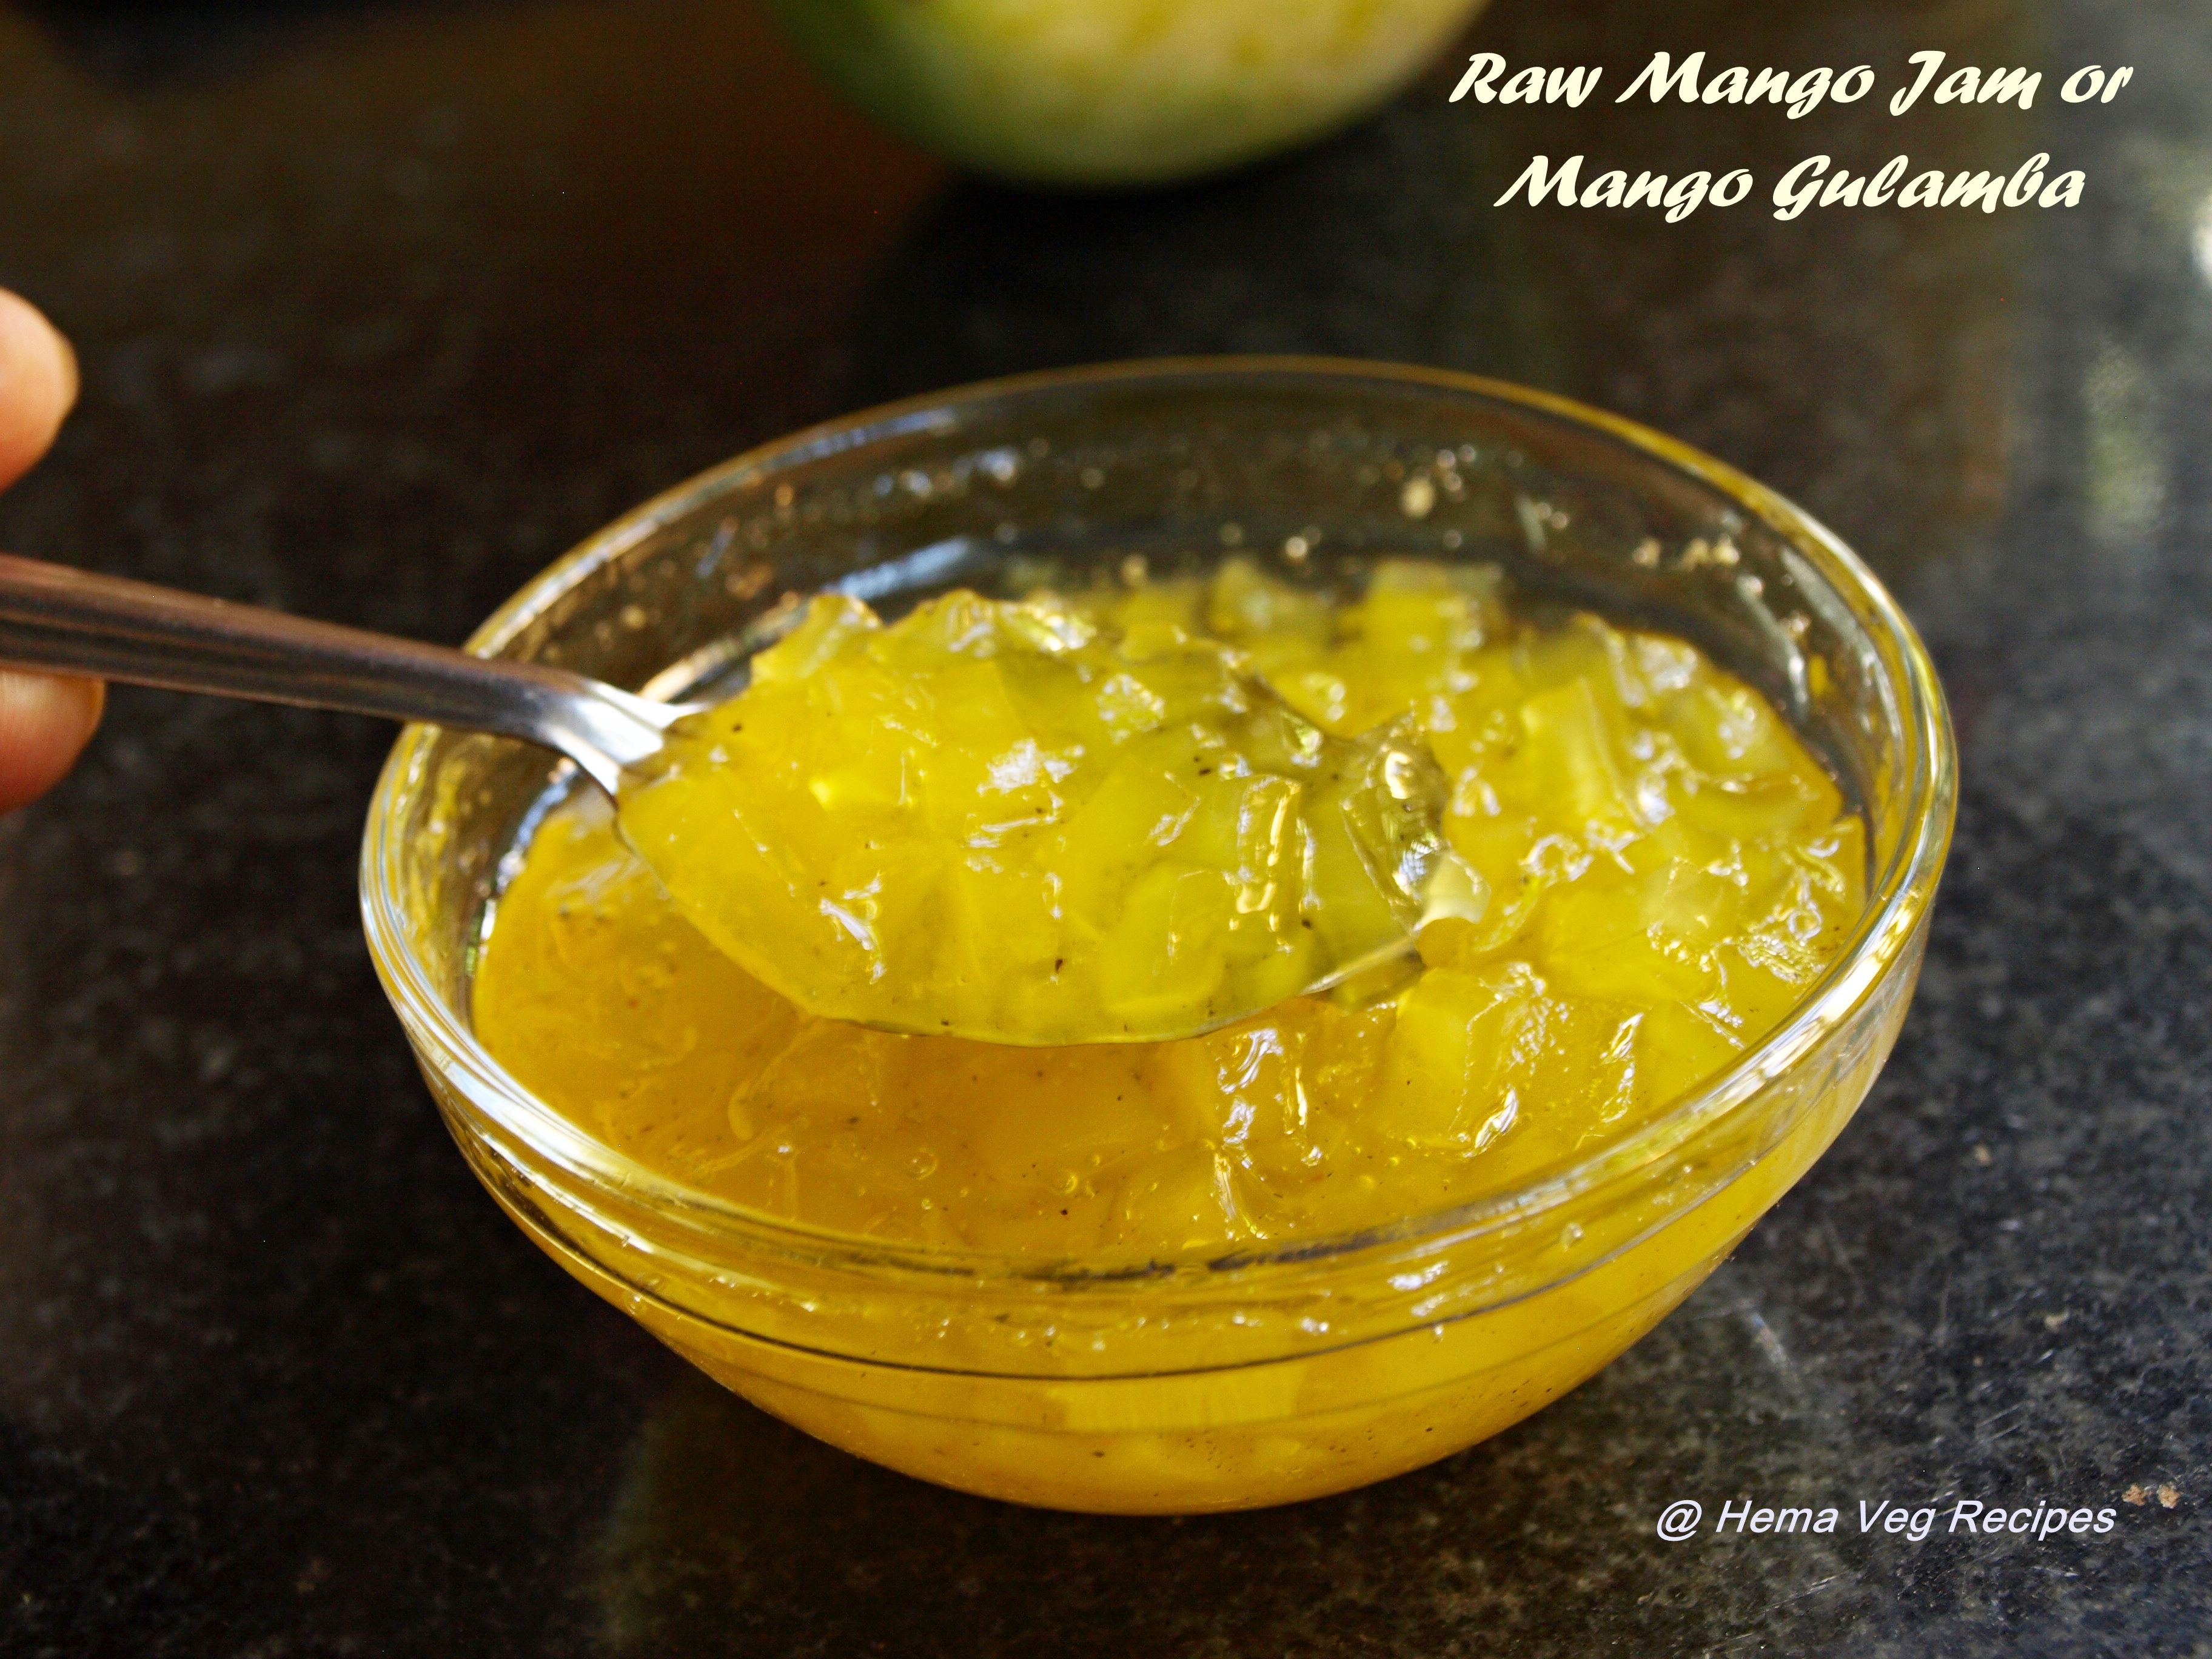 Raw Mango Jam or Mango Gulamba Preparation